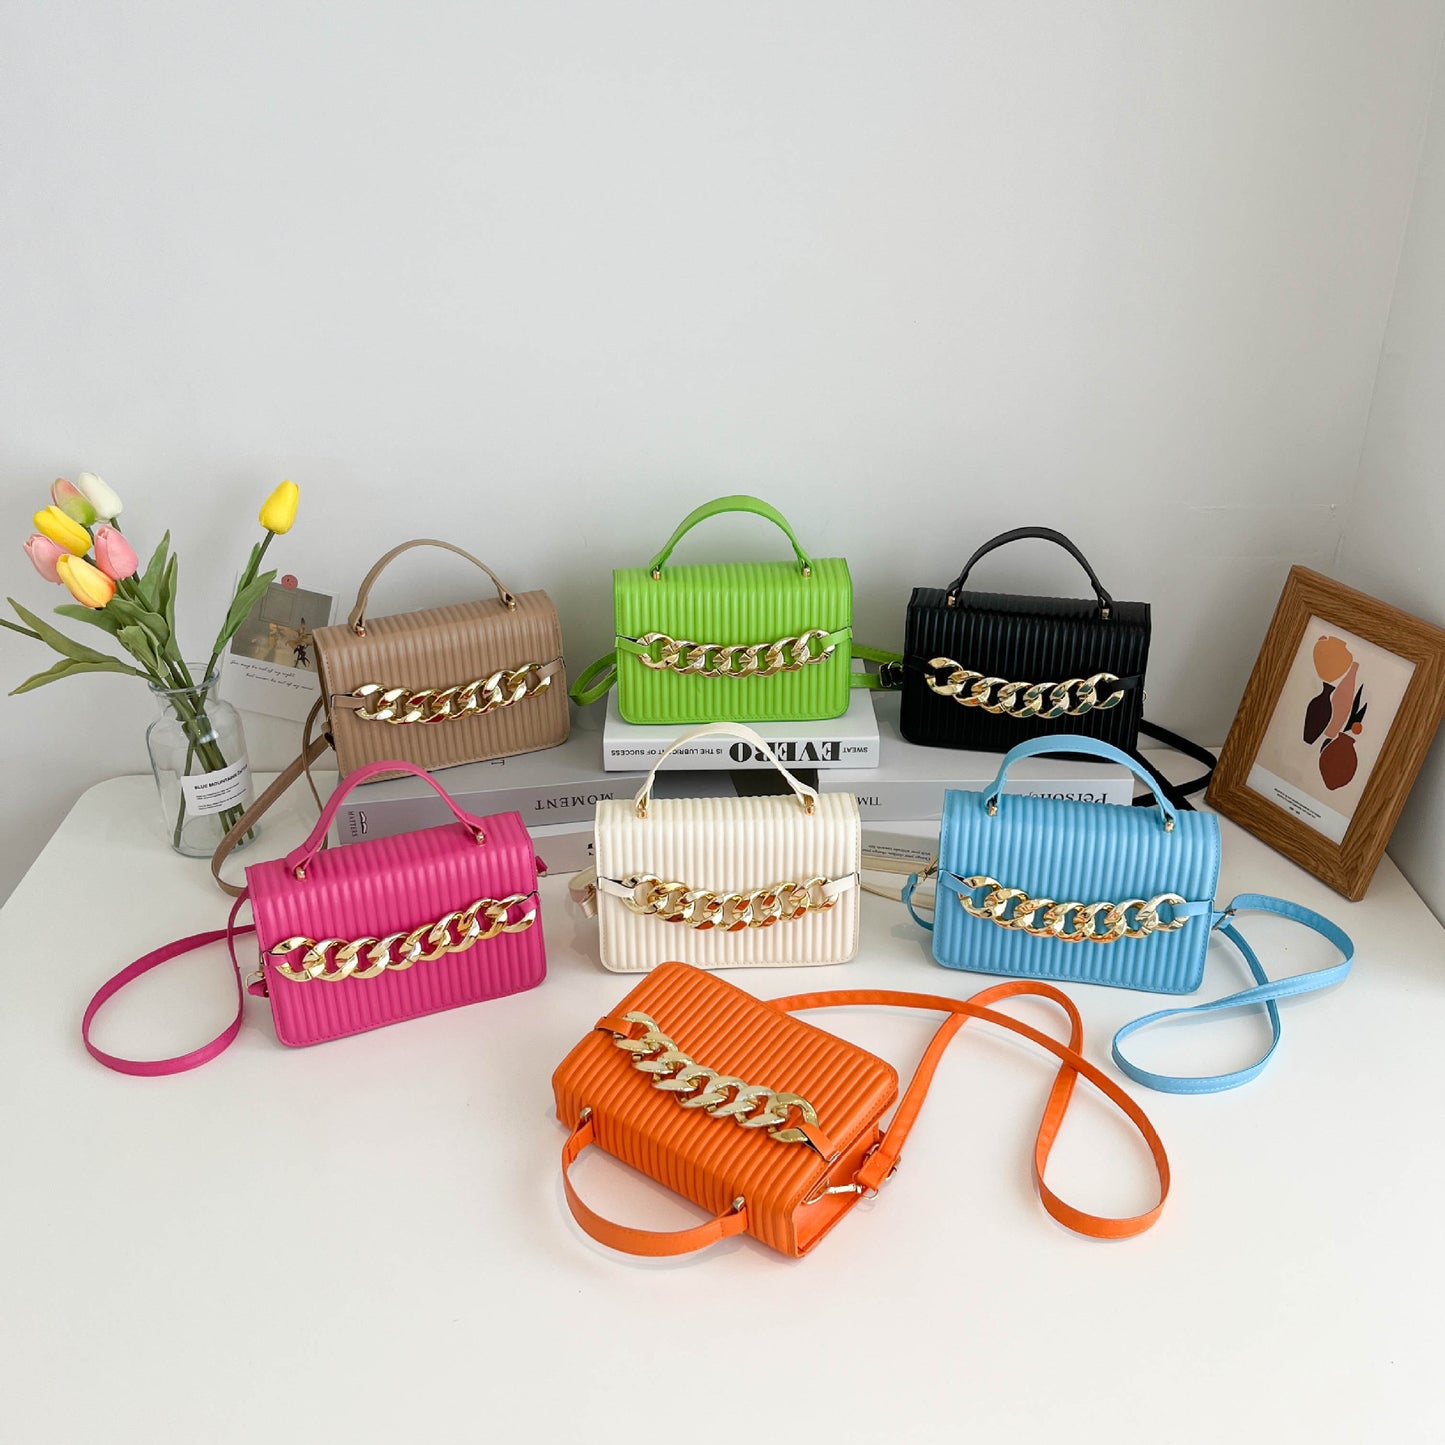 Fashion Handbag Chain Embellished Crossbody Bag